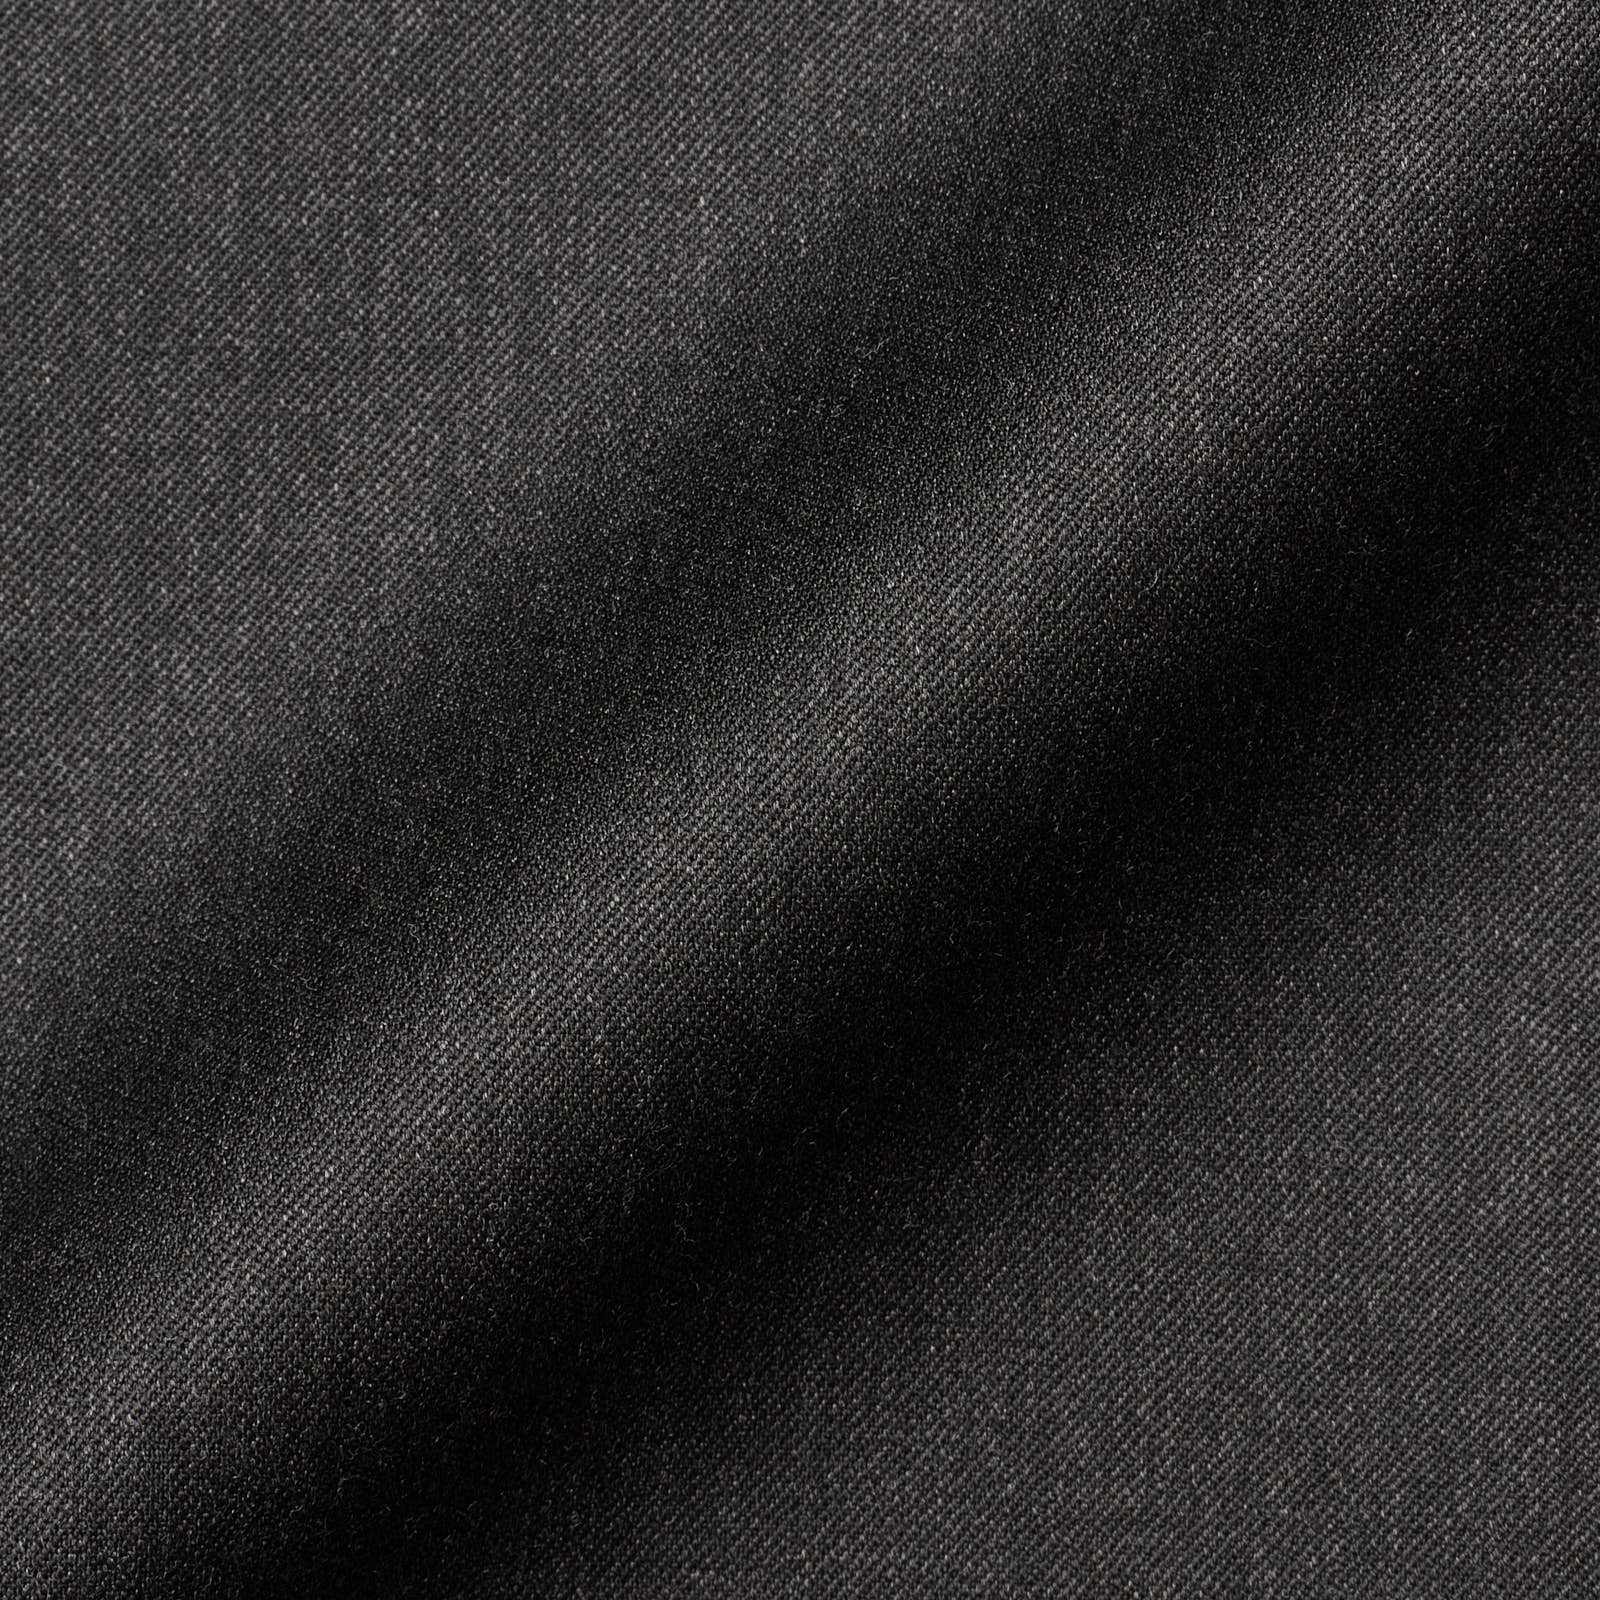 VANNUCCI Milano Charcoal Gray Virgin Wool Suit EU 54 NEW US 44